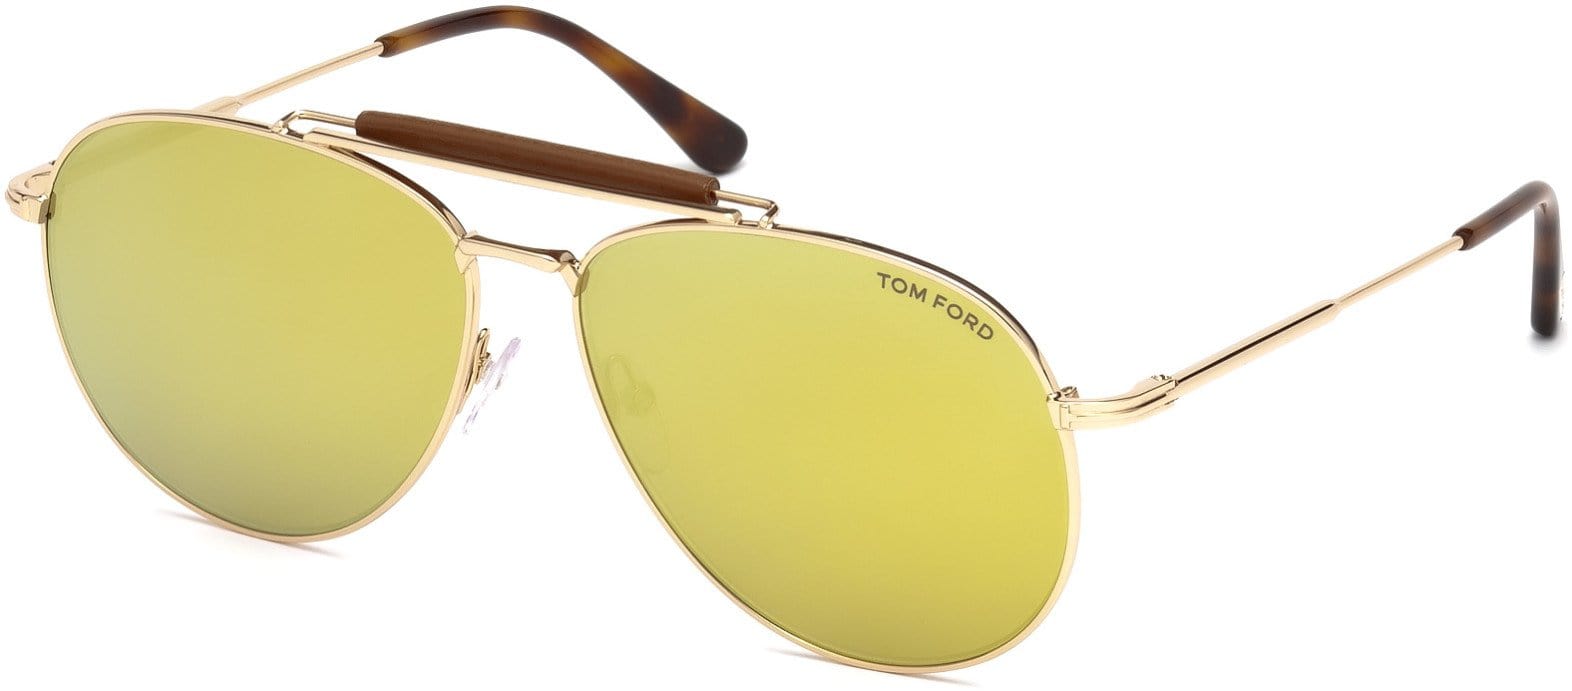 Tom Ford FT0536 Sean Aviator Sunglasses 28G-28G - Shiny Rose Gold / Brown Mirror